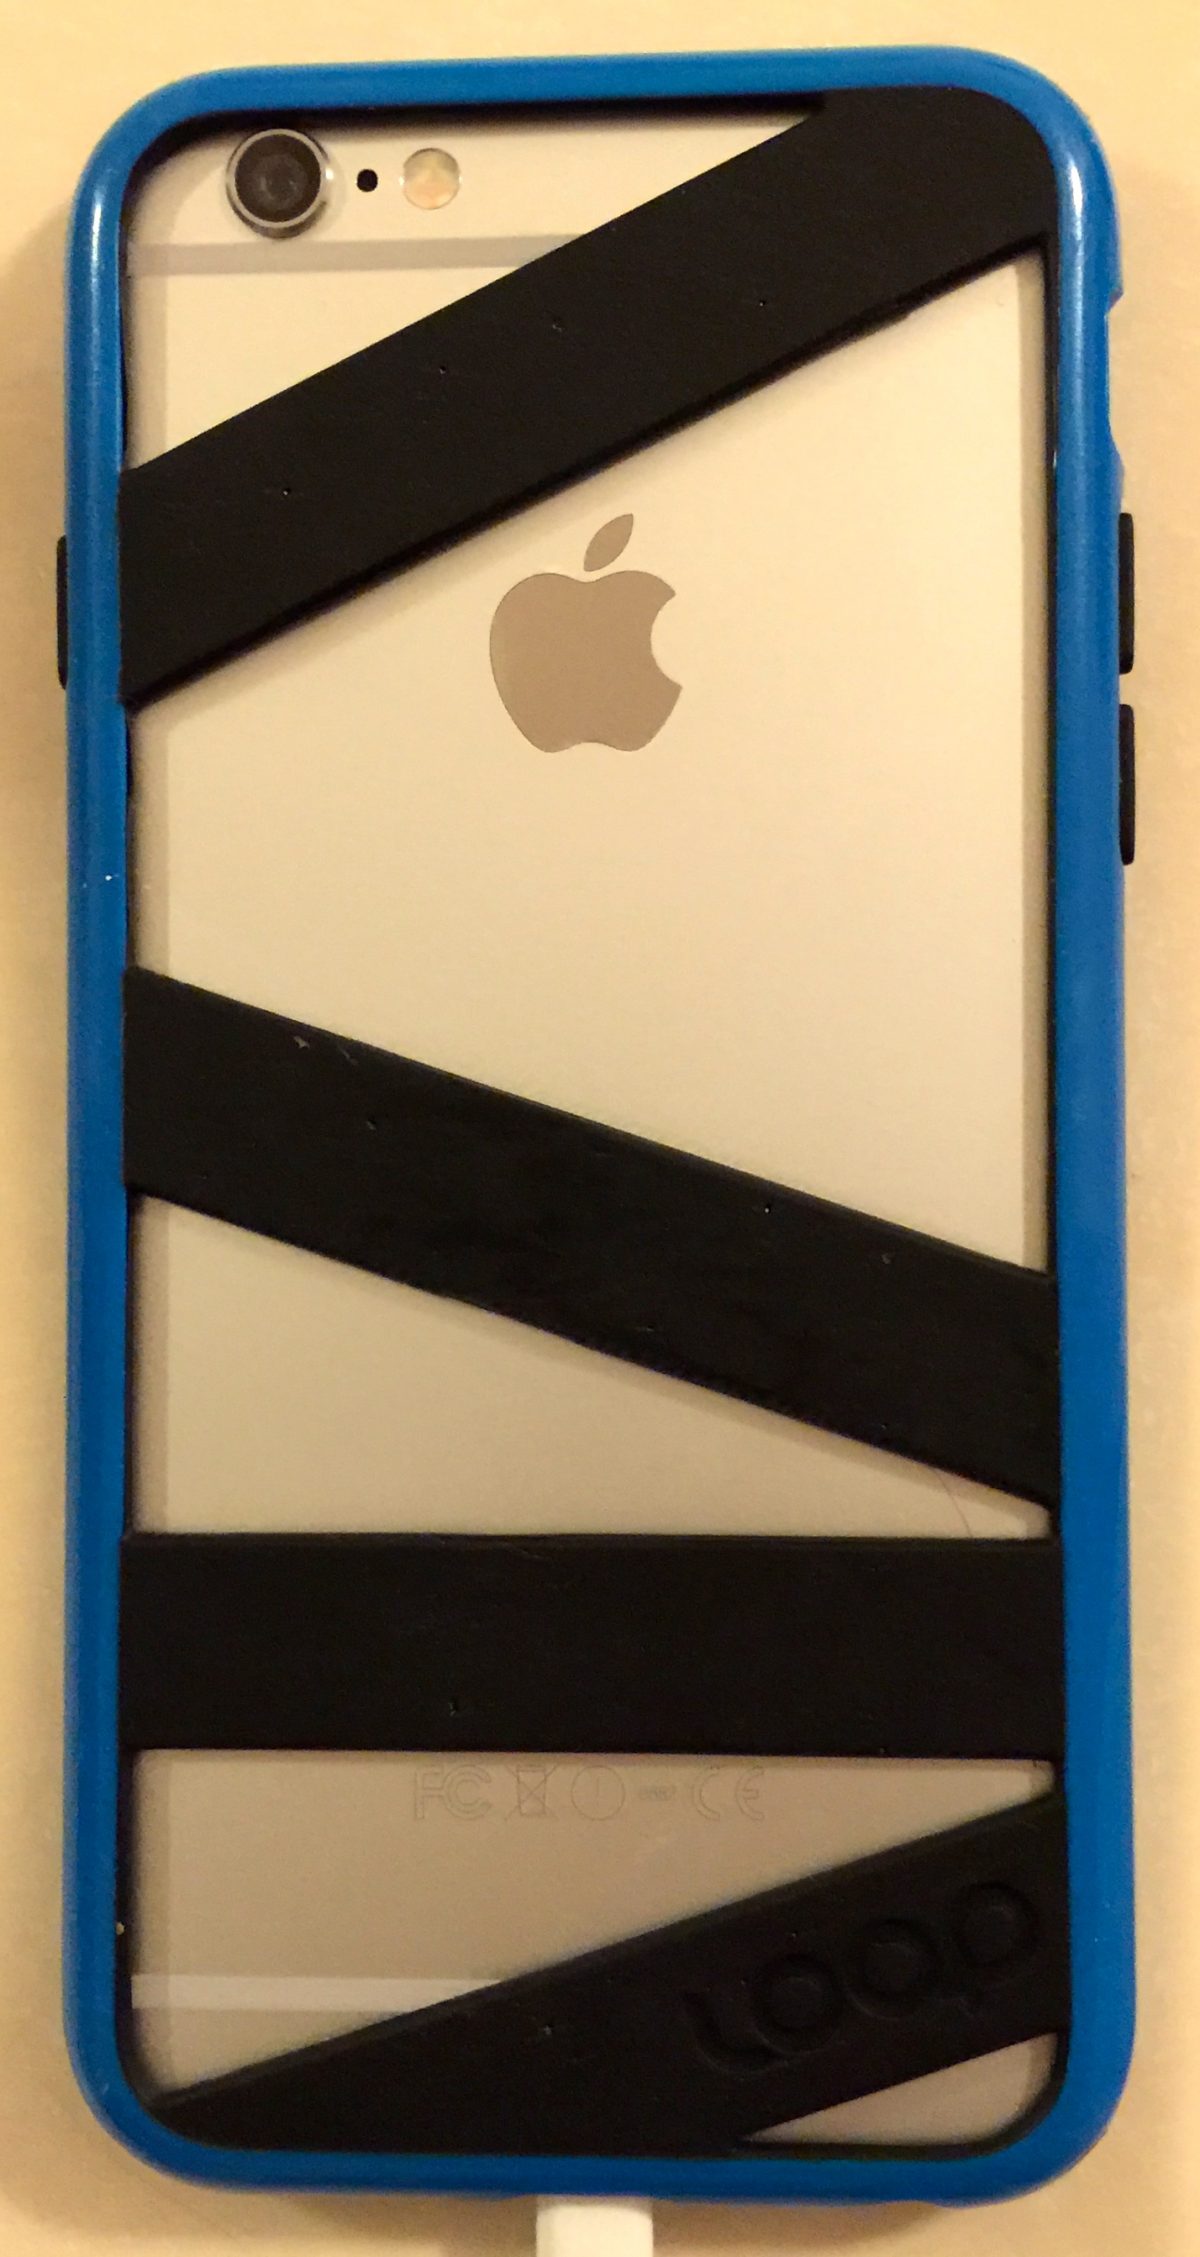 Loop Straitjacket iPhone 6 Case Review - Perfectly Minimal